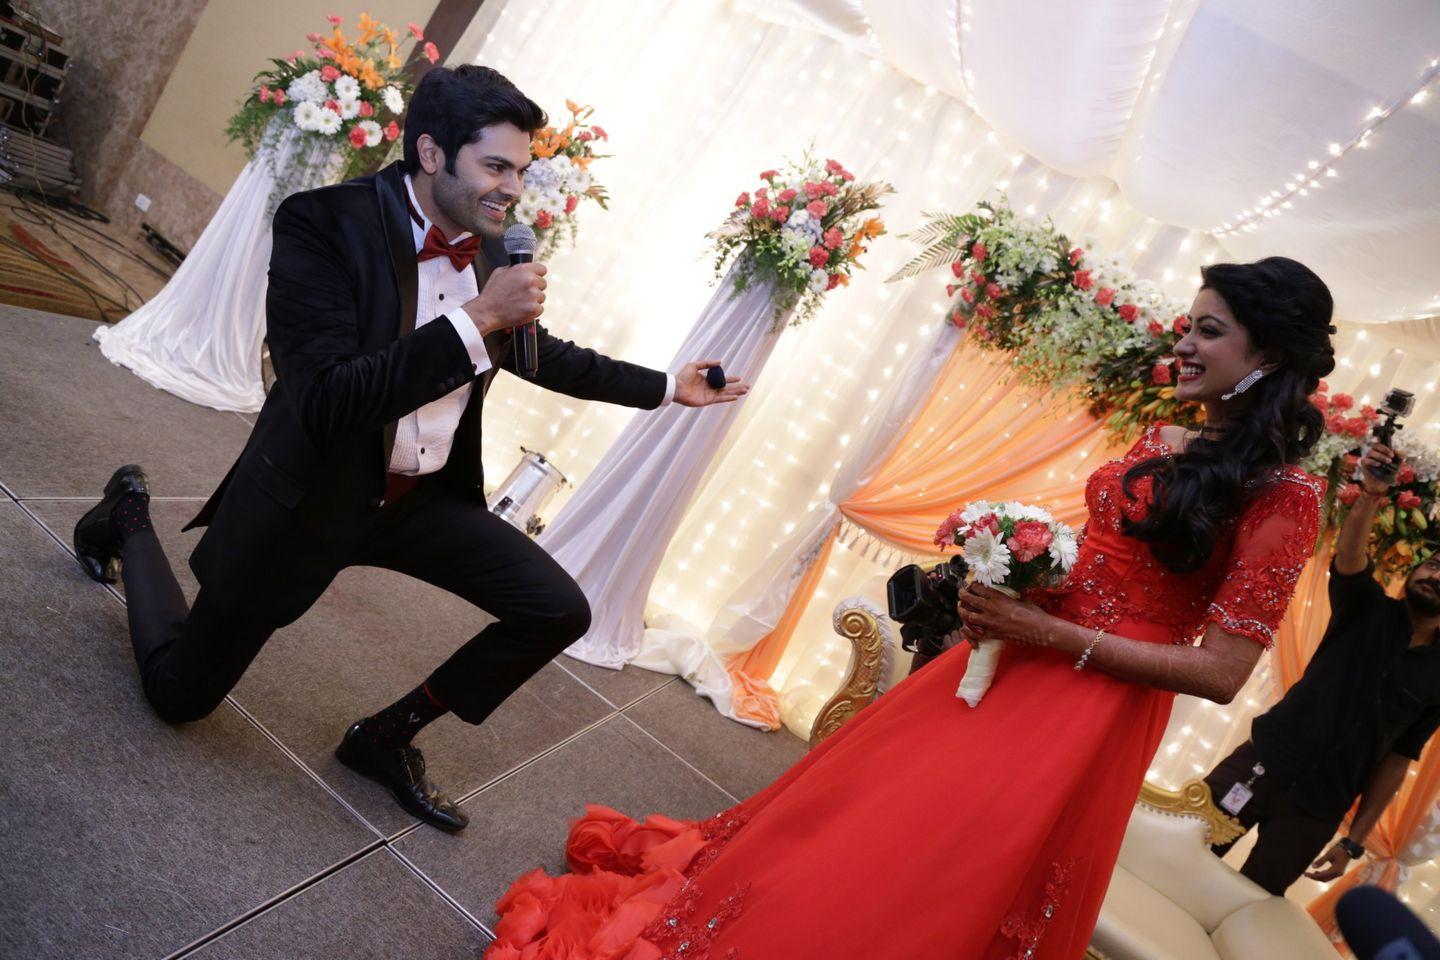 Ganesh Venkatraman Nisha Wedding Reception Photos Part II